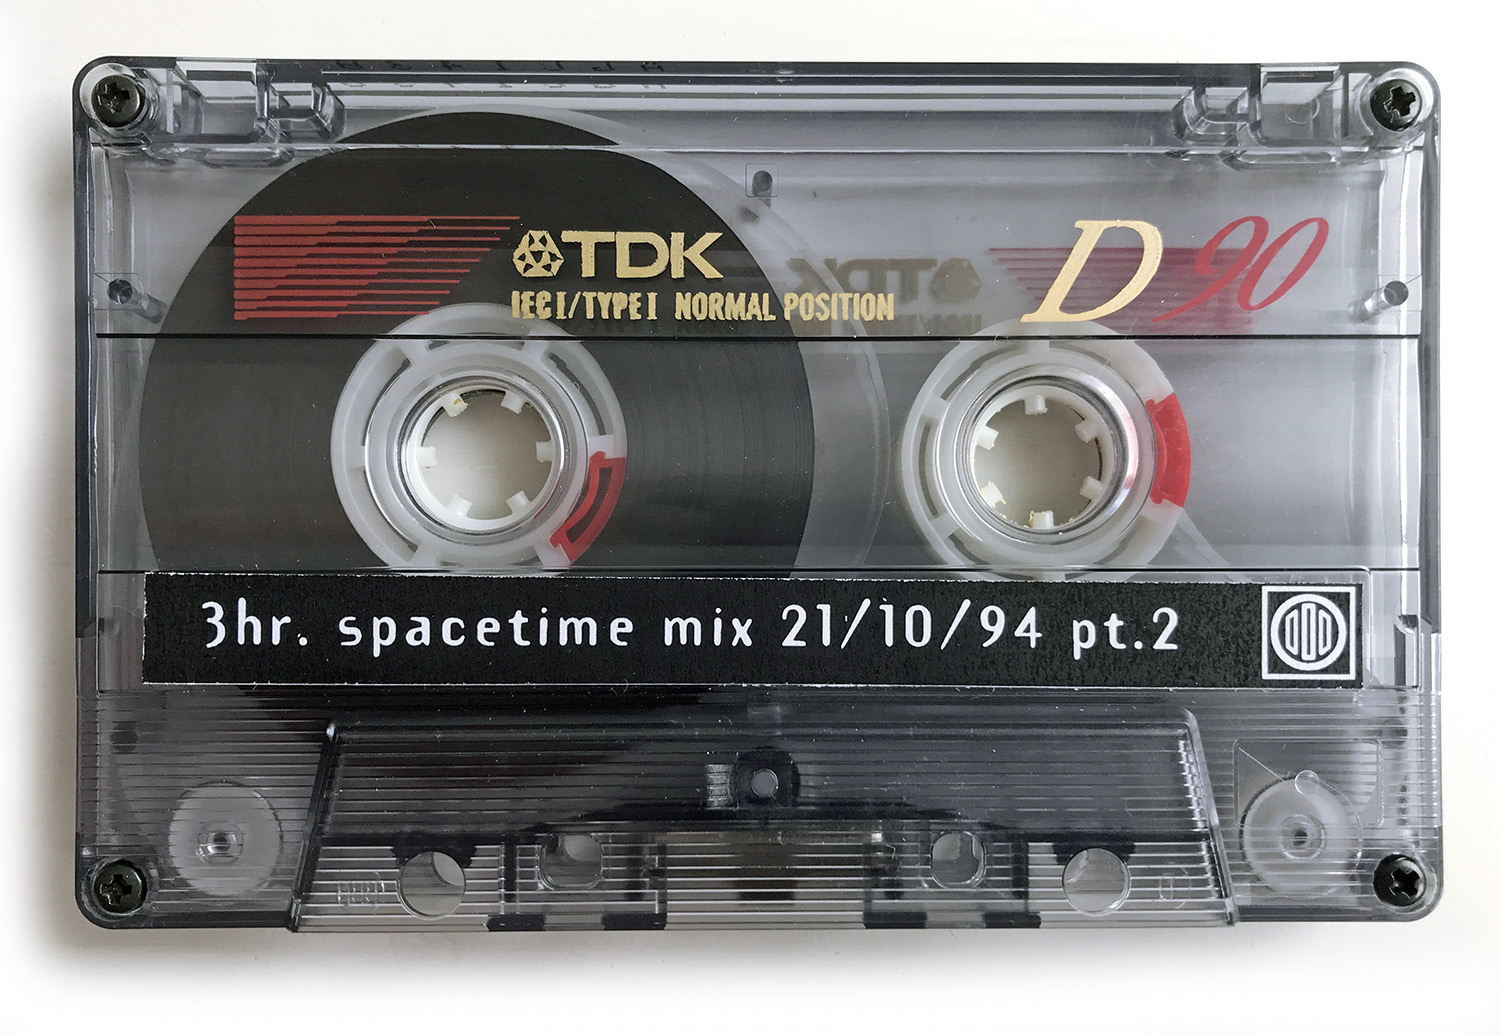 MS200 3hr Spacetime mix 21:10:94 Pt.2 tape